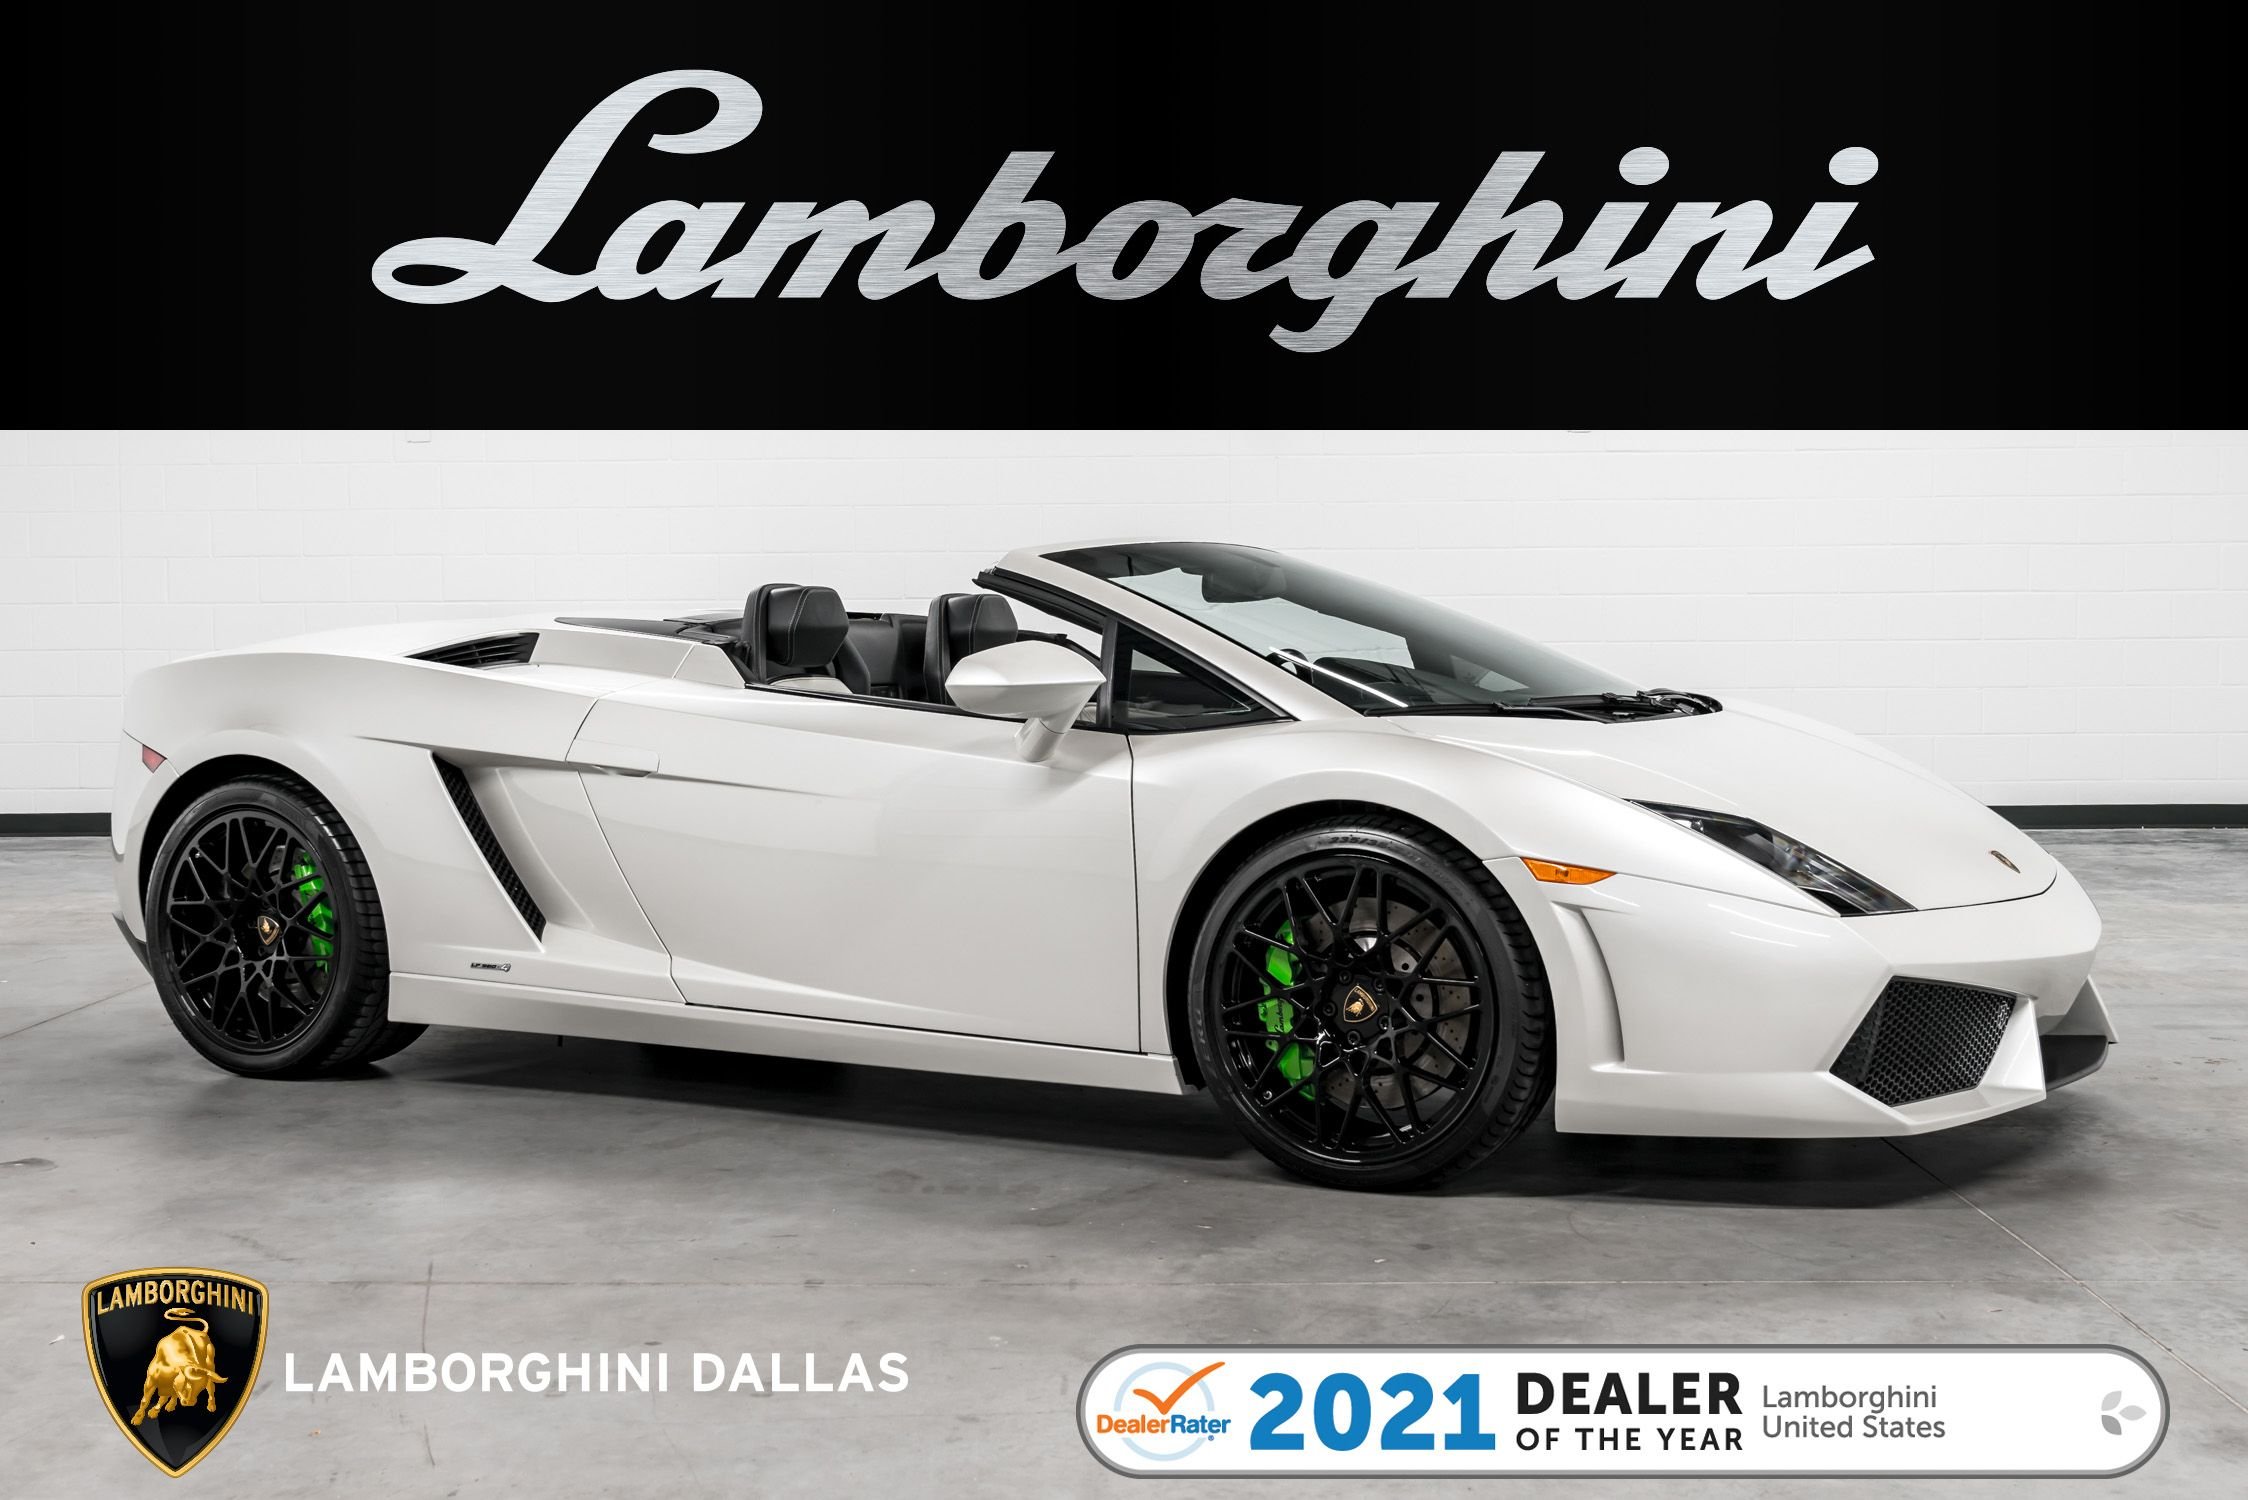 Used 2011 Lamborghini Gallardo For Sale Richardson,TX | Stock 